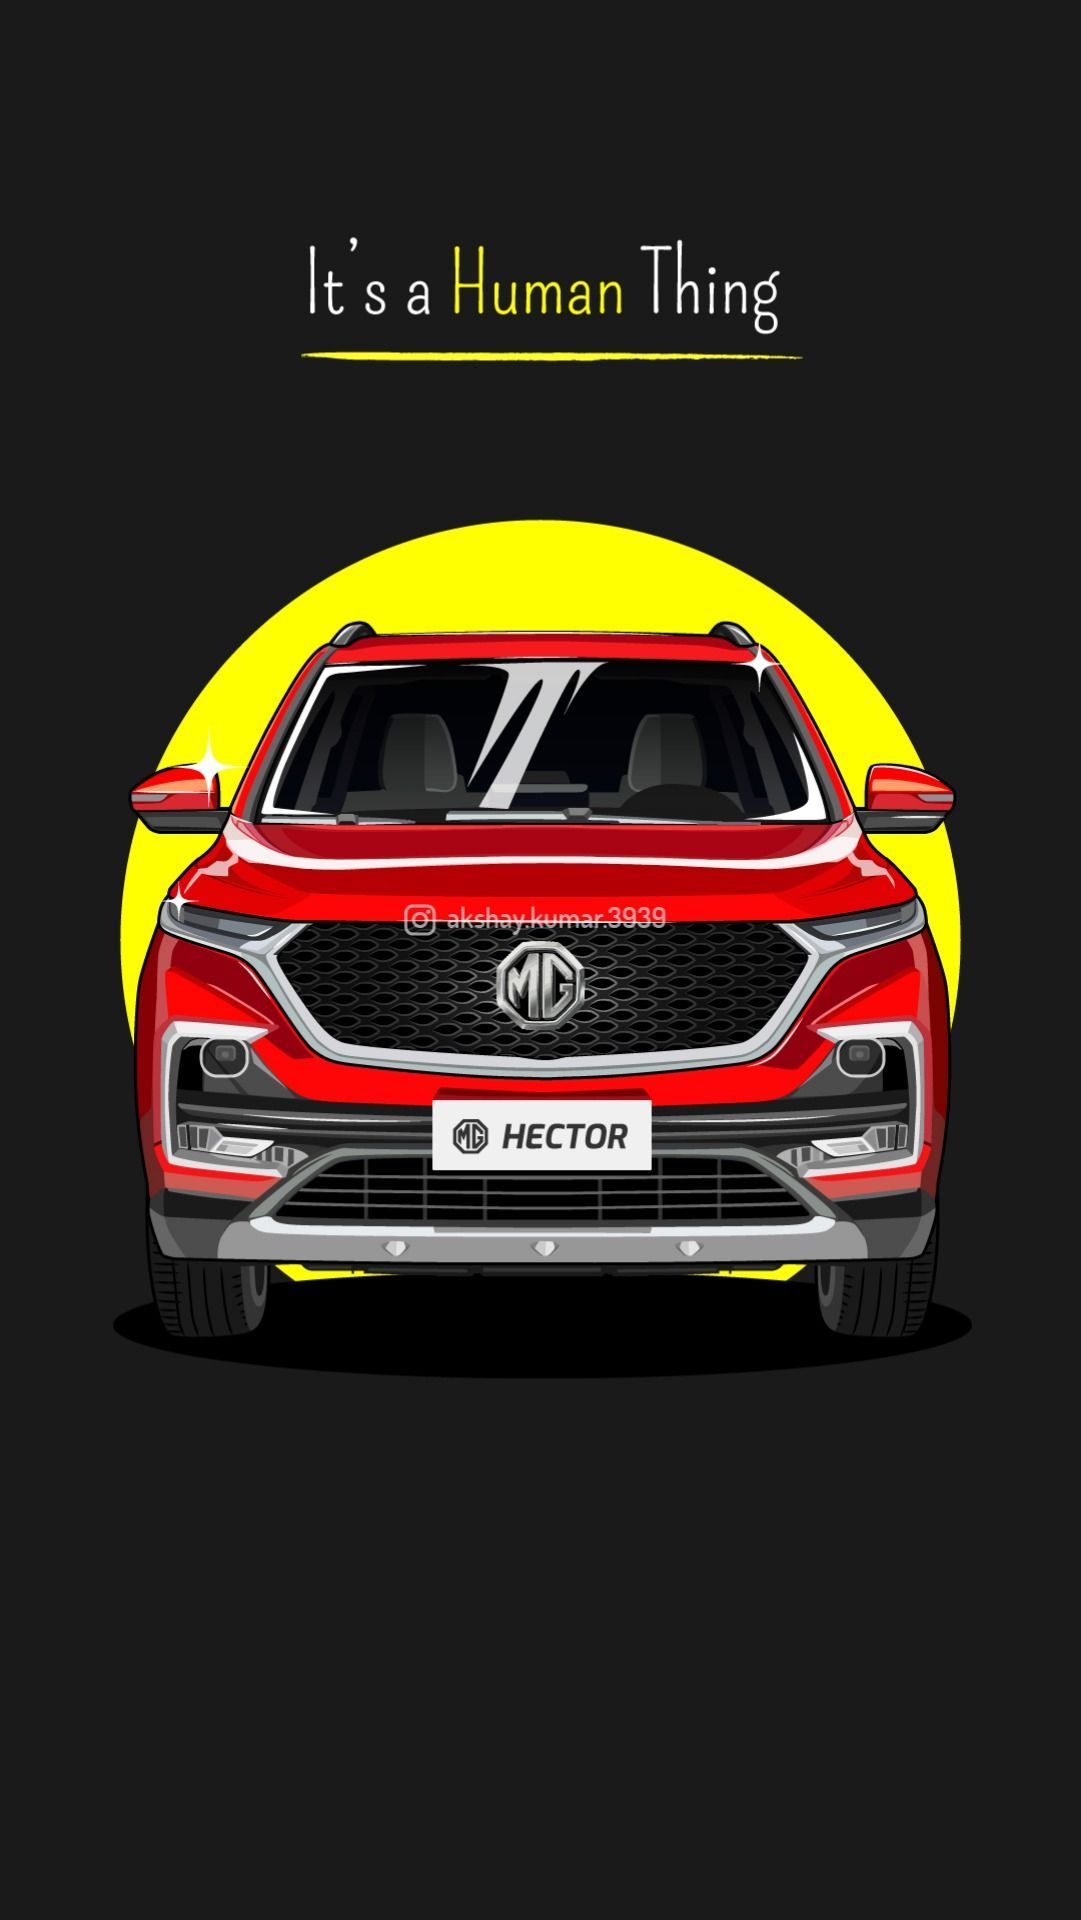 MG Hector Wallpaper. Indian Cars Wallpaper. Vector Art. Hector, Car vector, Car wallpaper